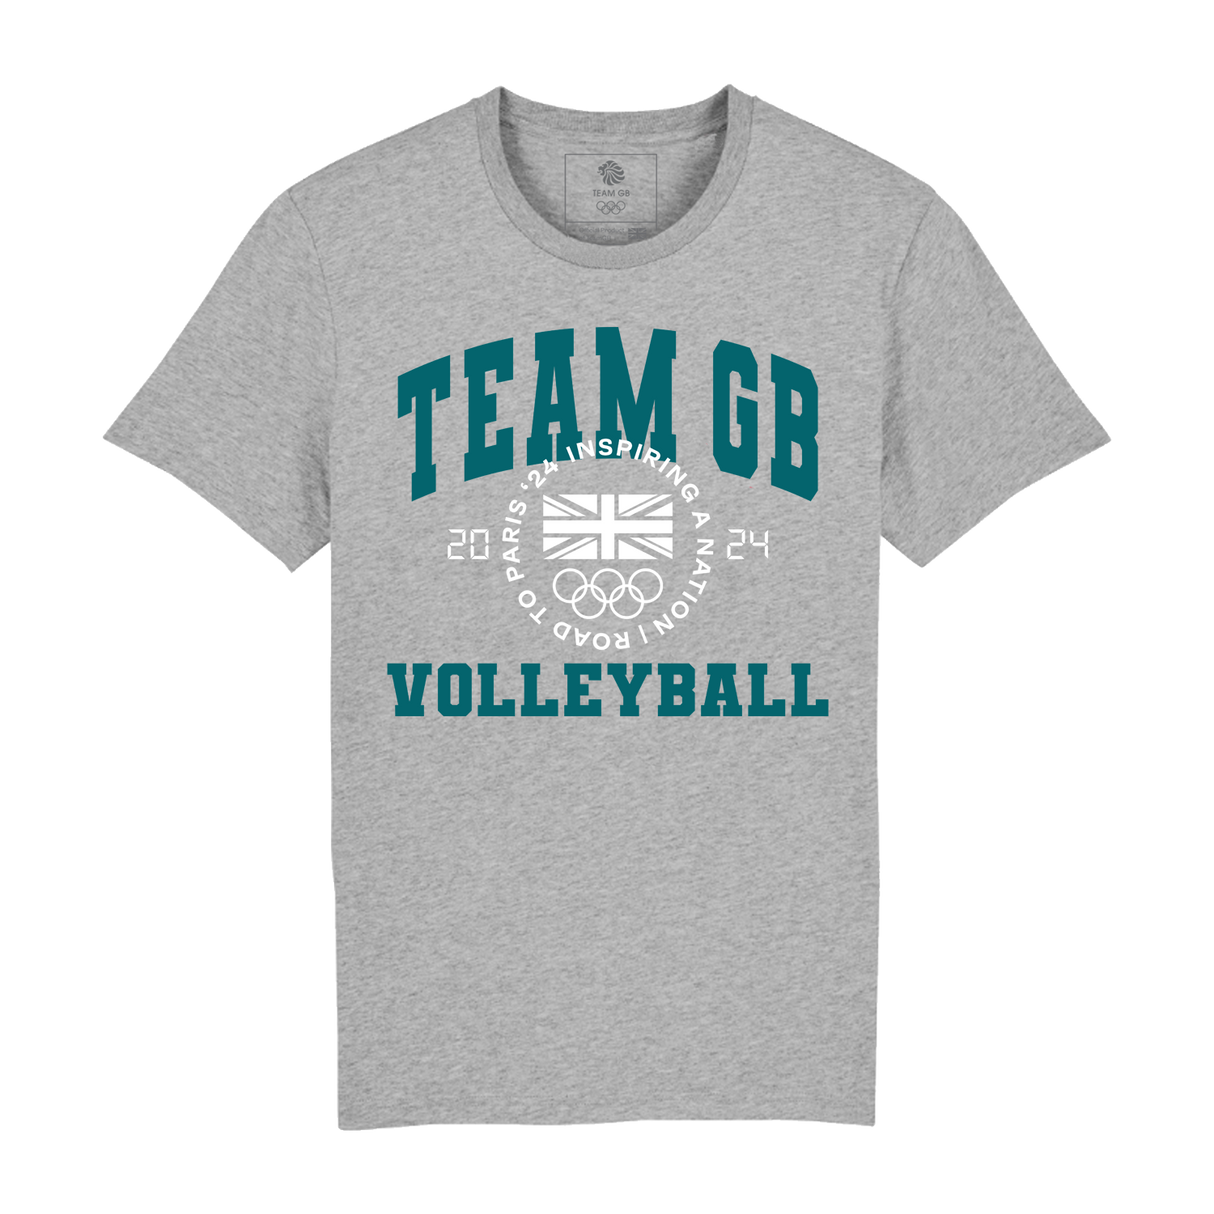 Team GB Varsity Volleyball Grey T-shirt